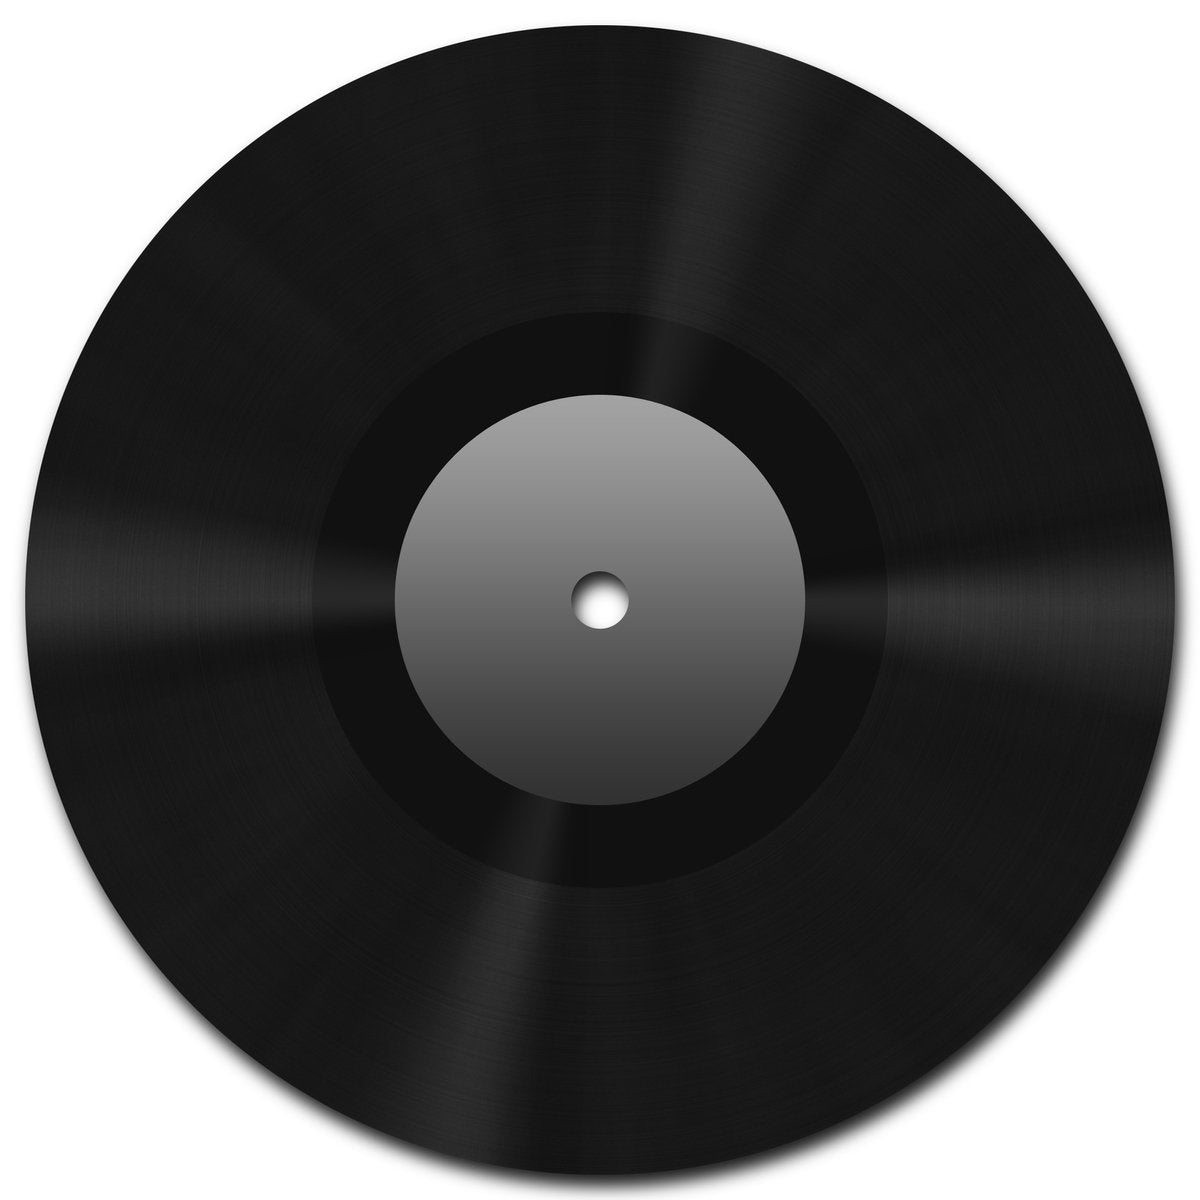 Okemah Rising CD / Vinyl – The Woody Guthrie Store